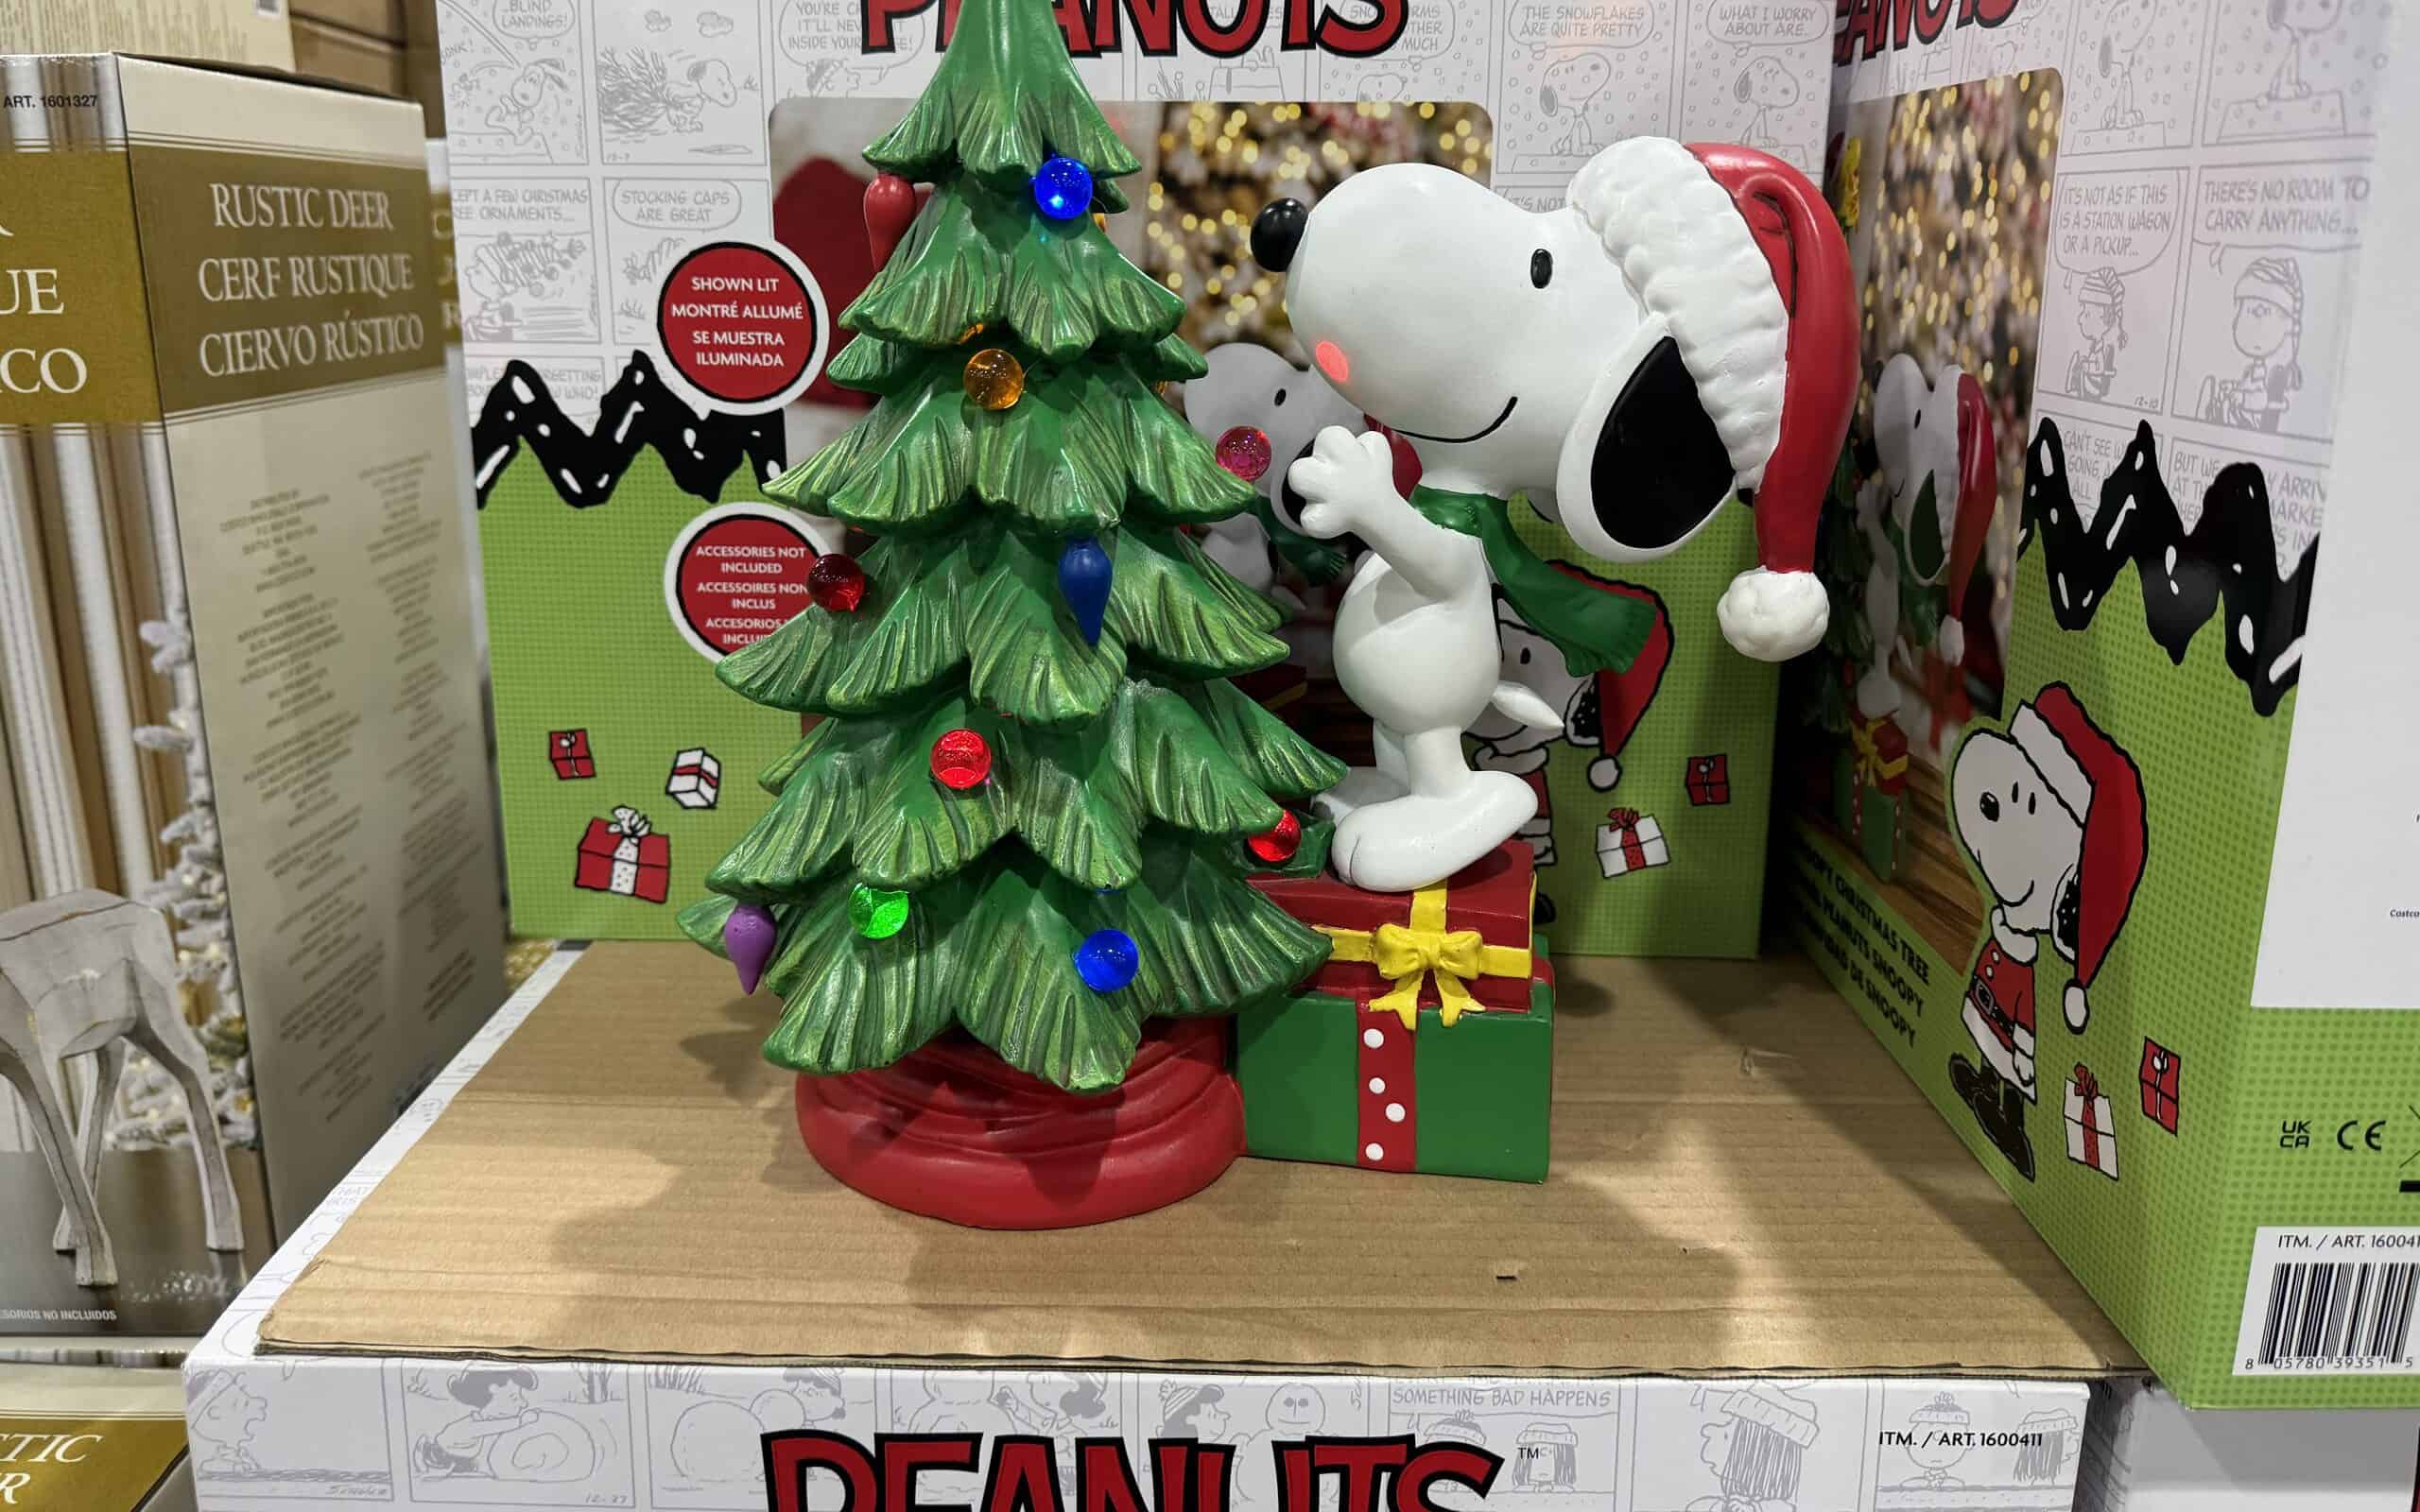 Peanuts and Woodstock Holiday tree